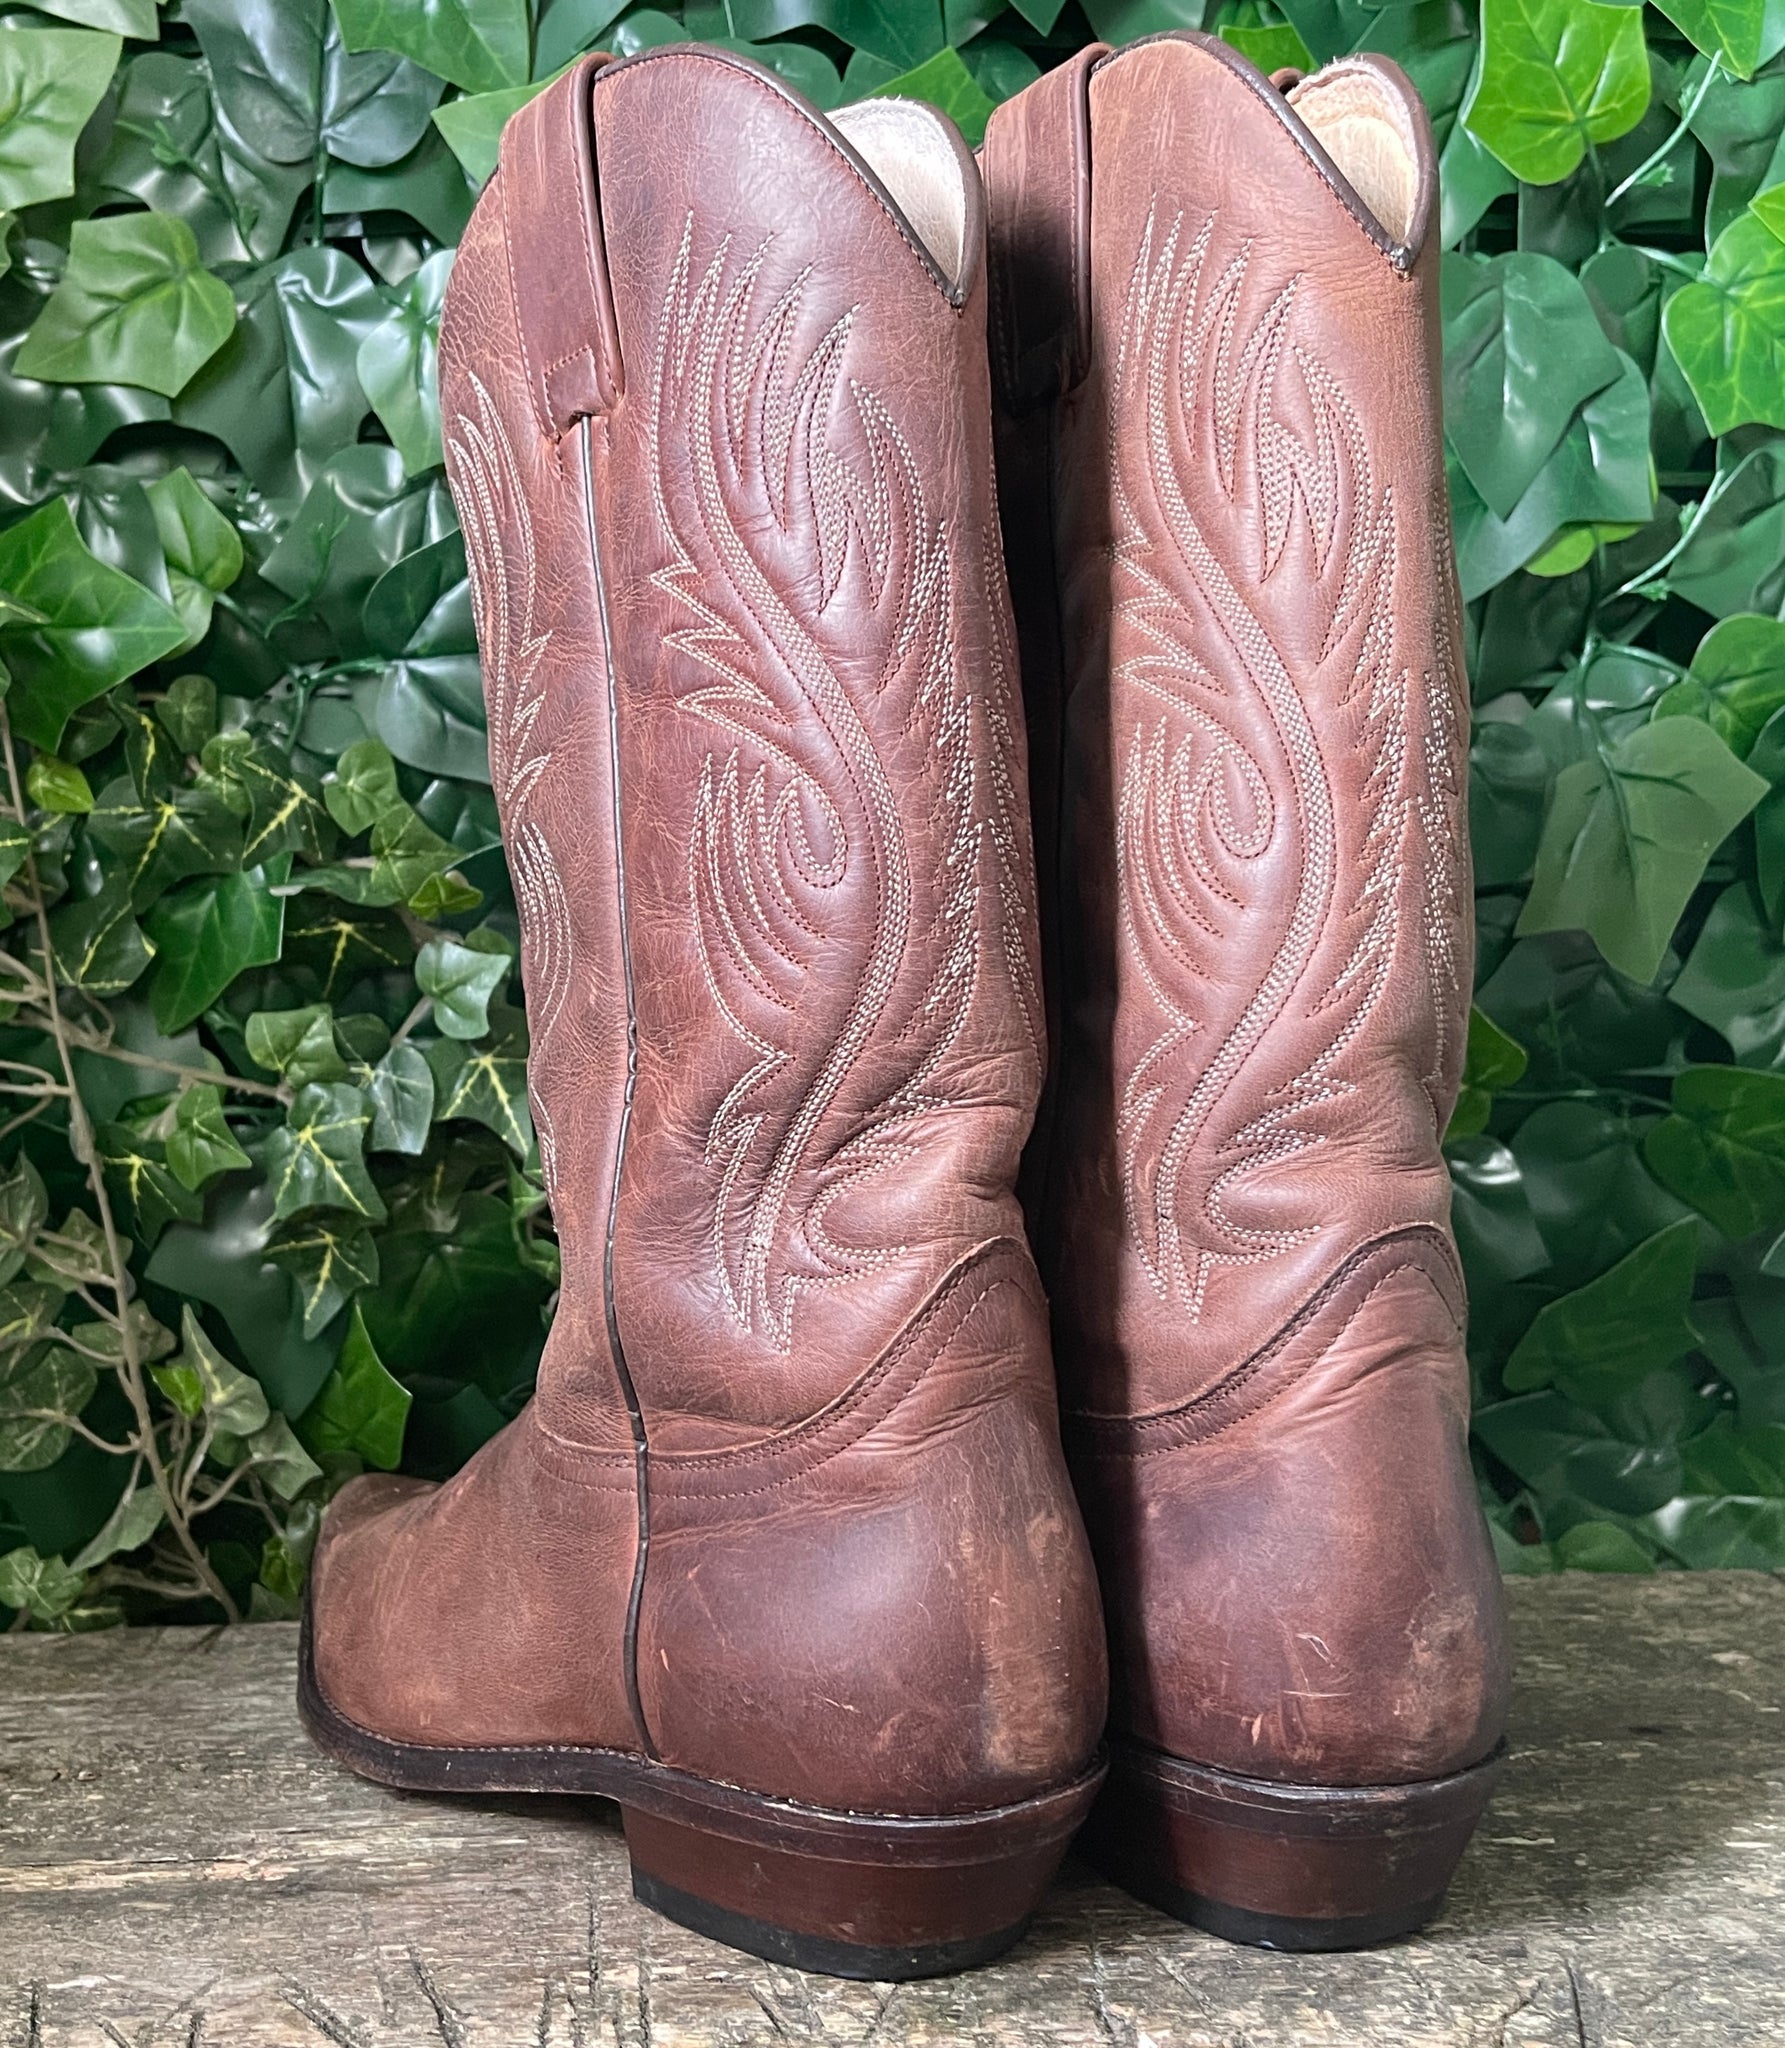 Vulkanisch Refrein Bekentenis Z.g.a.n..cowboy western boots laarzen van sendra maat 44 – Lotteshoes4you